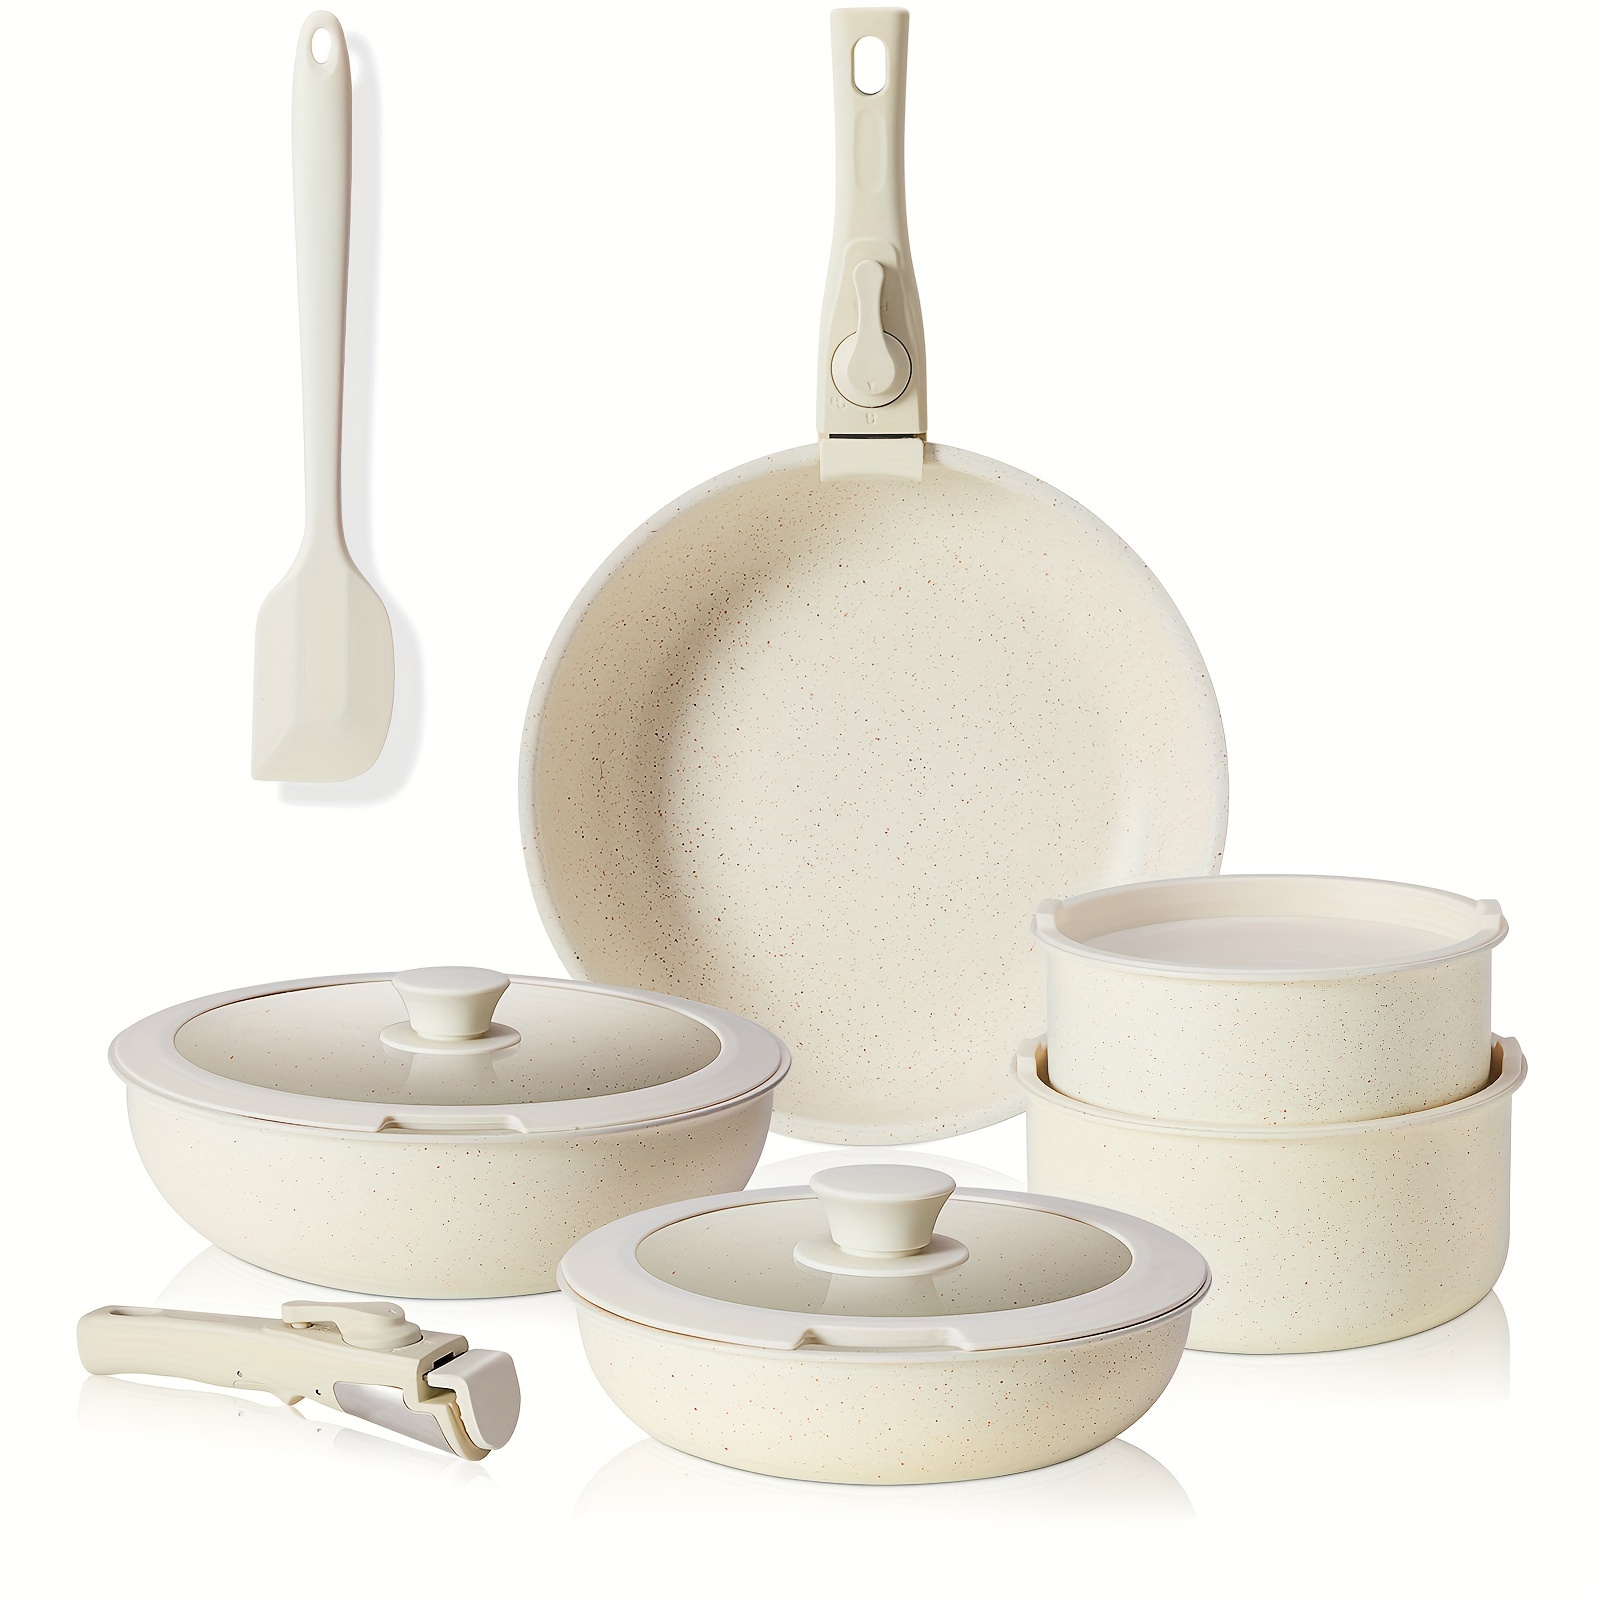 

12 Pcs Pots And Pans Set Nonstick - Kitchen Cookware Set With Detachable Handle, Induction Cookware, Dishwasher Oven Safe, Beige